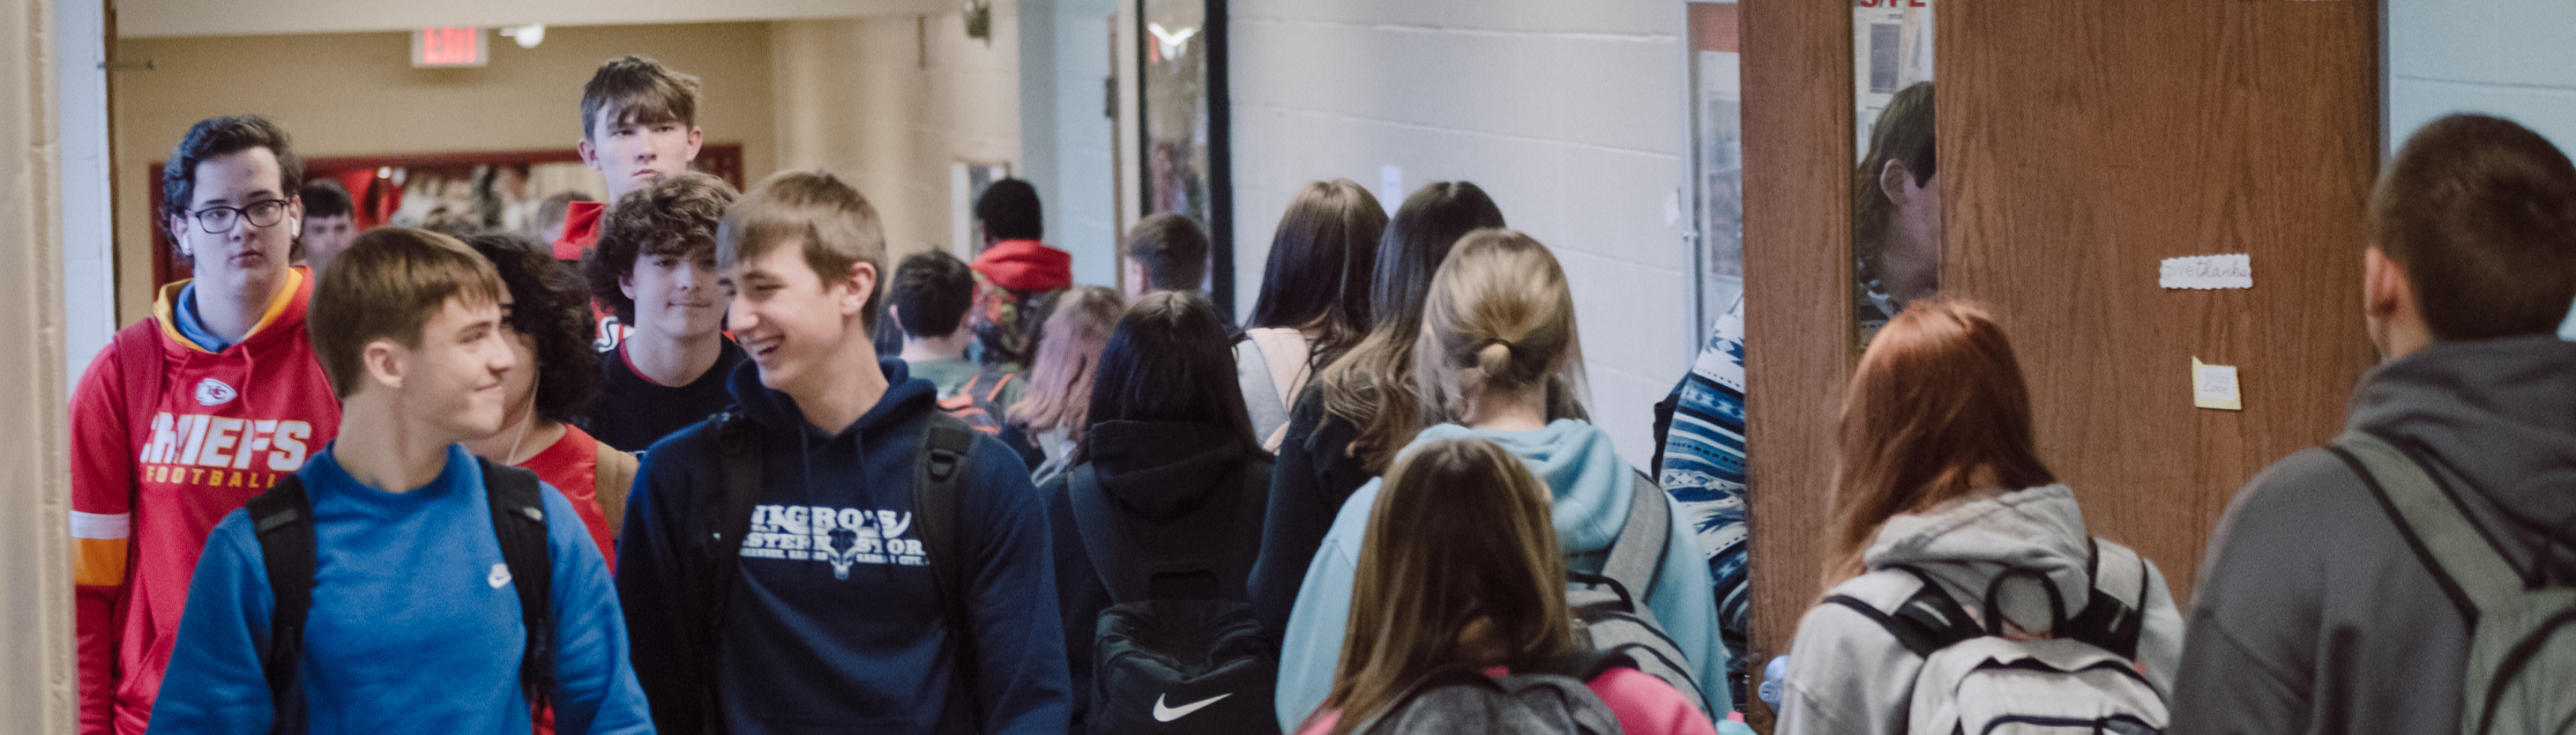 High School Students Walking in Hallway